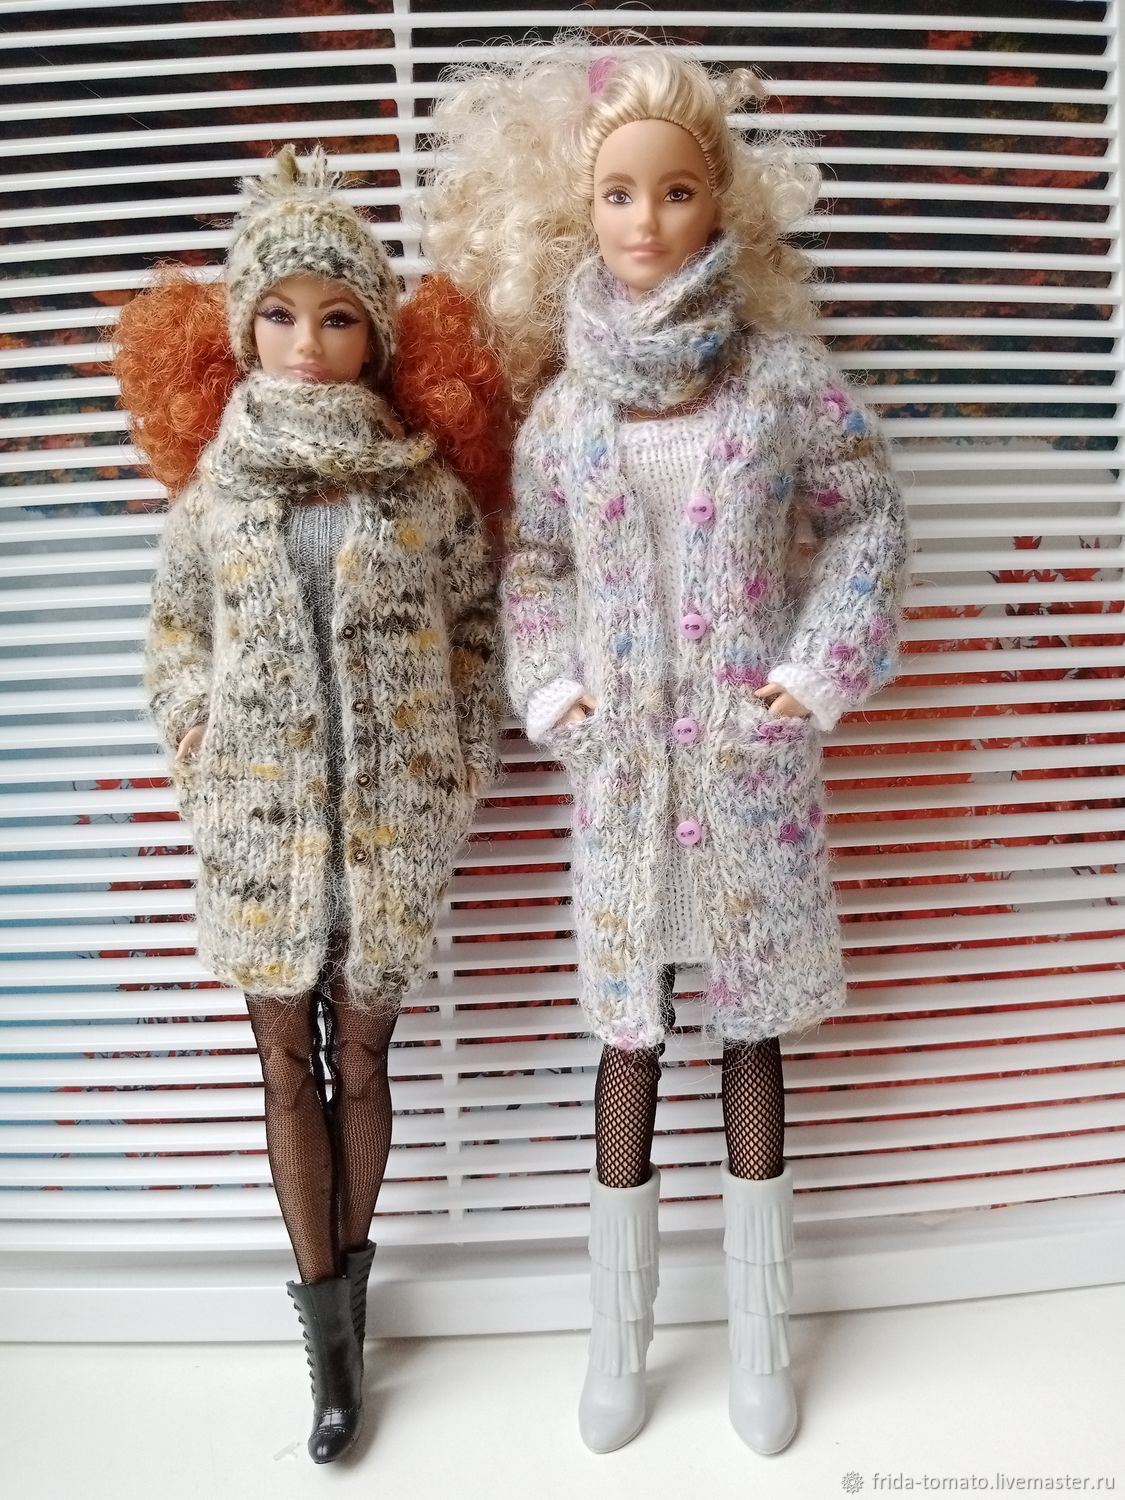 Одежда для кукол типа Барби VIANA набор 4 предмета цвет темно-синий